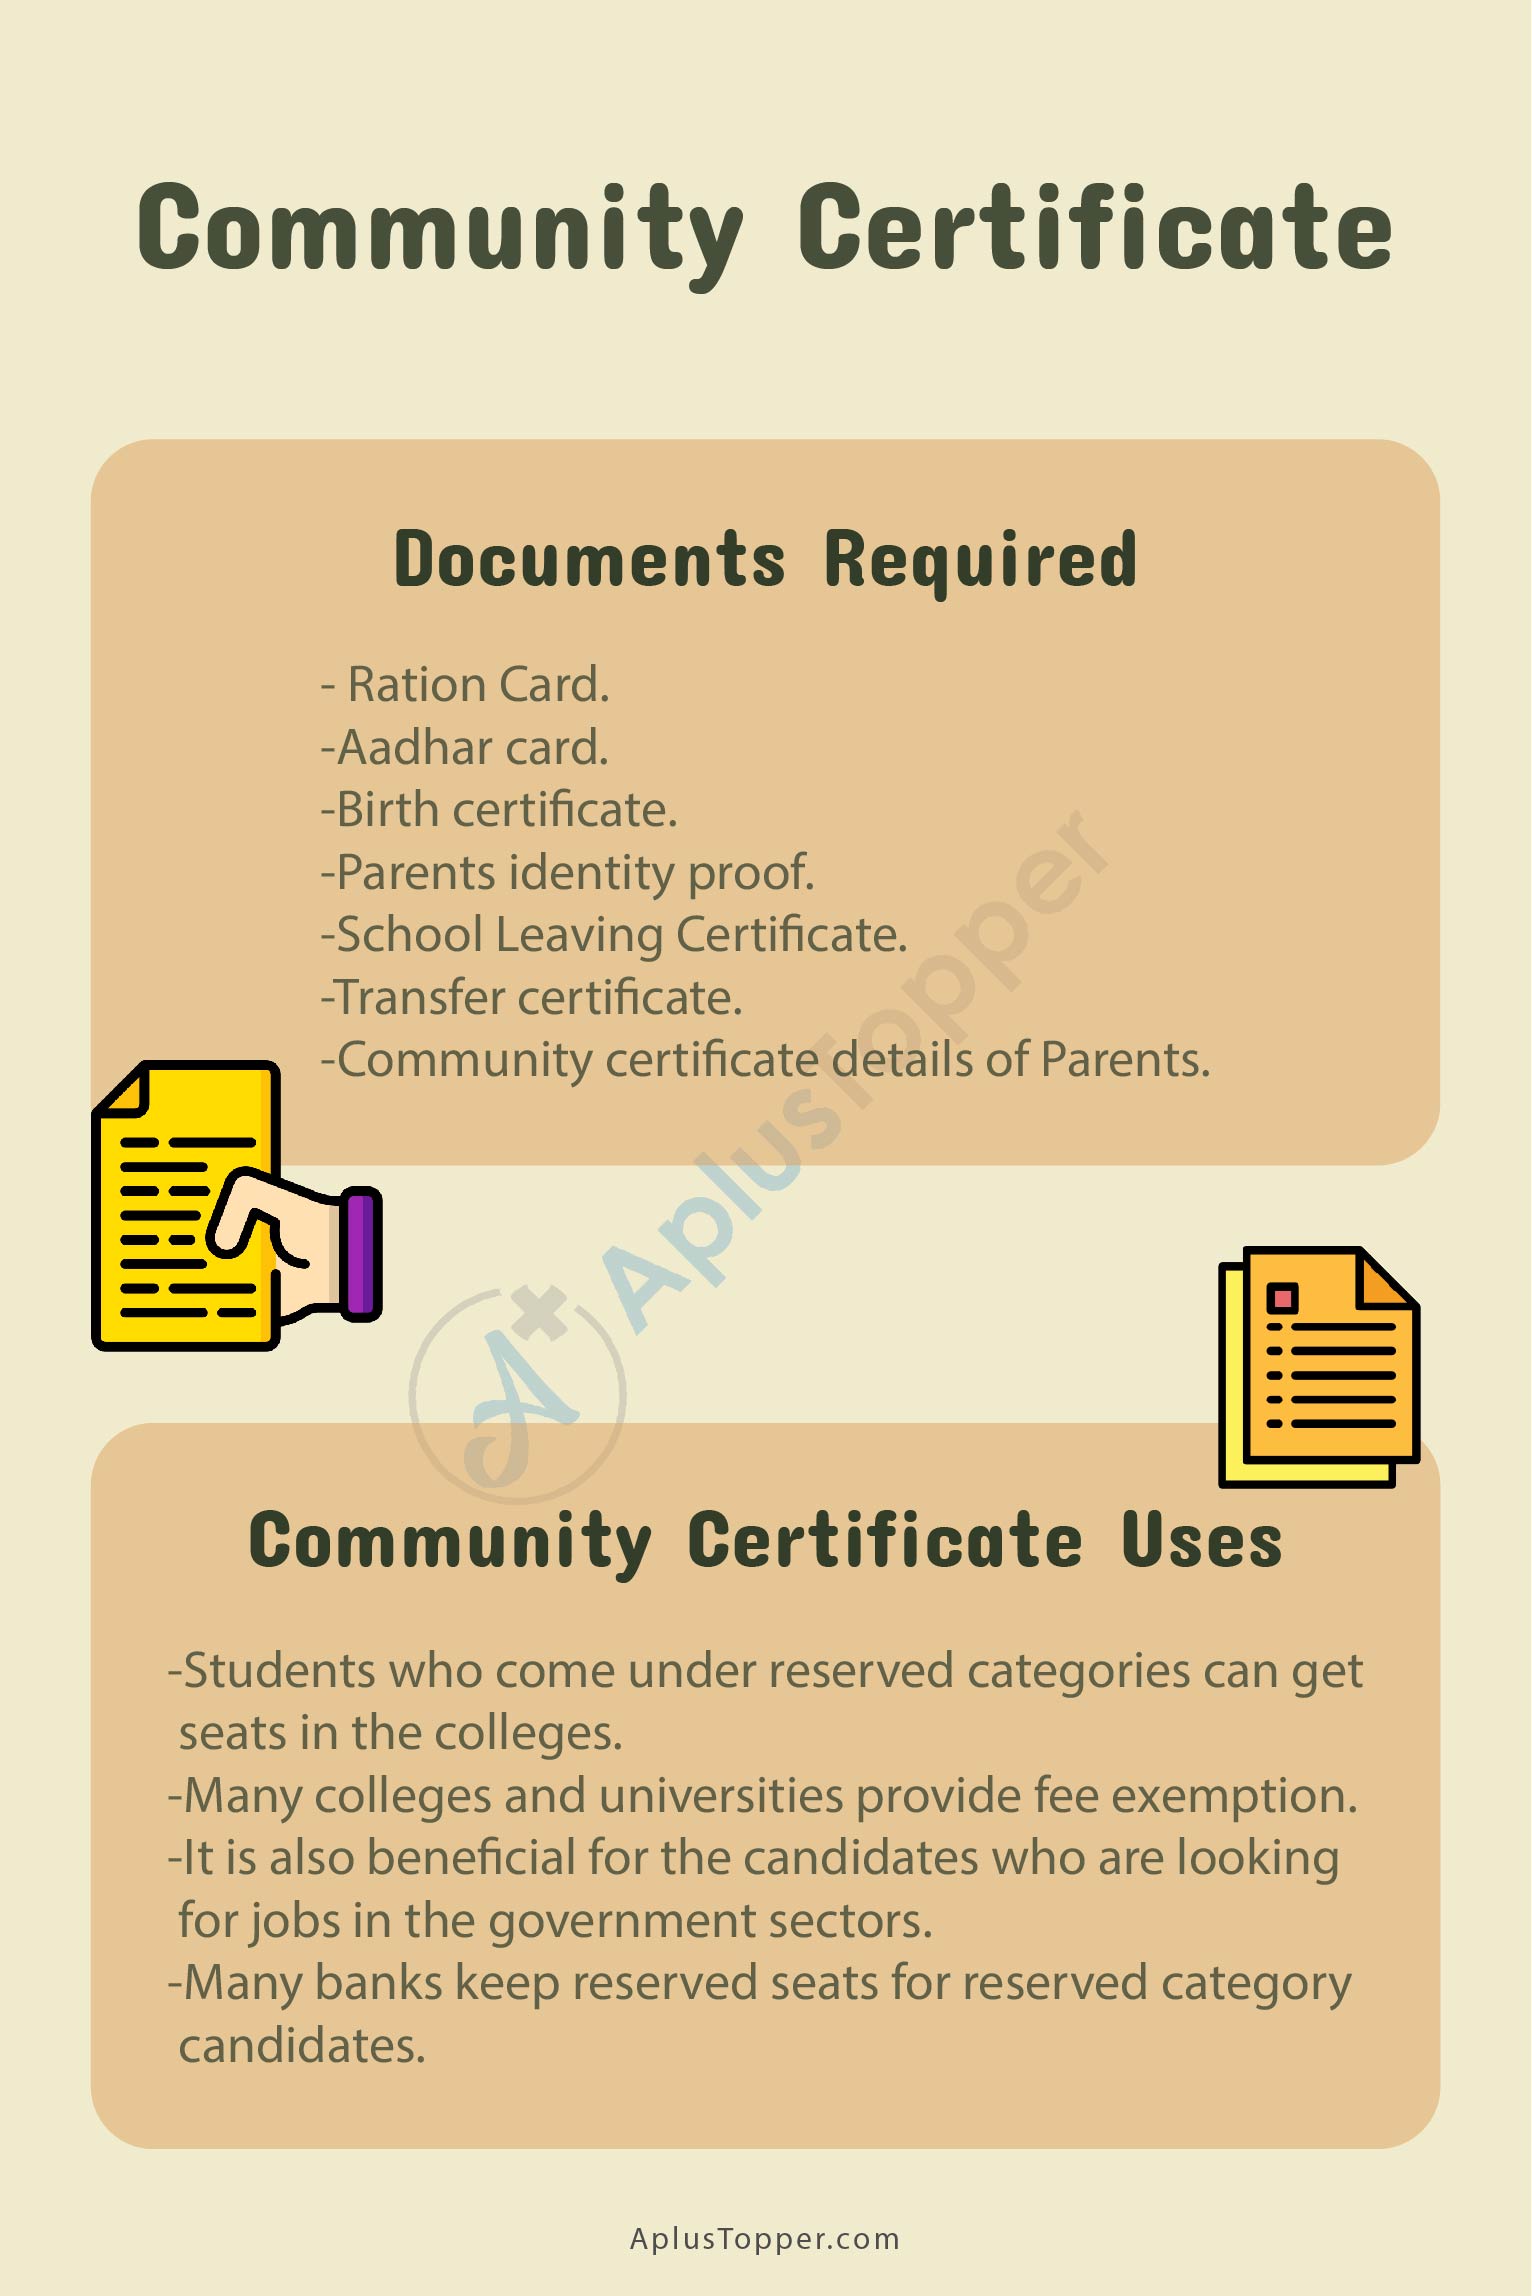 Community Certificate